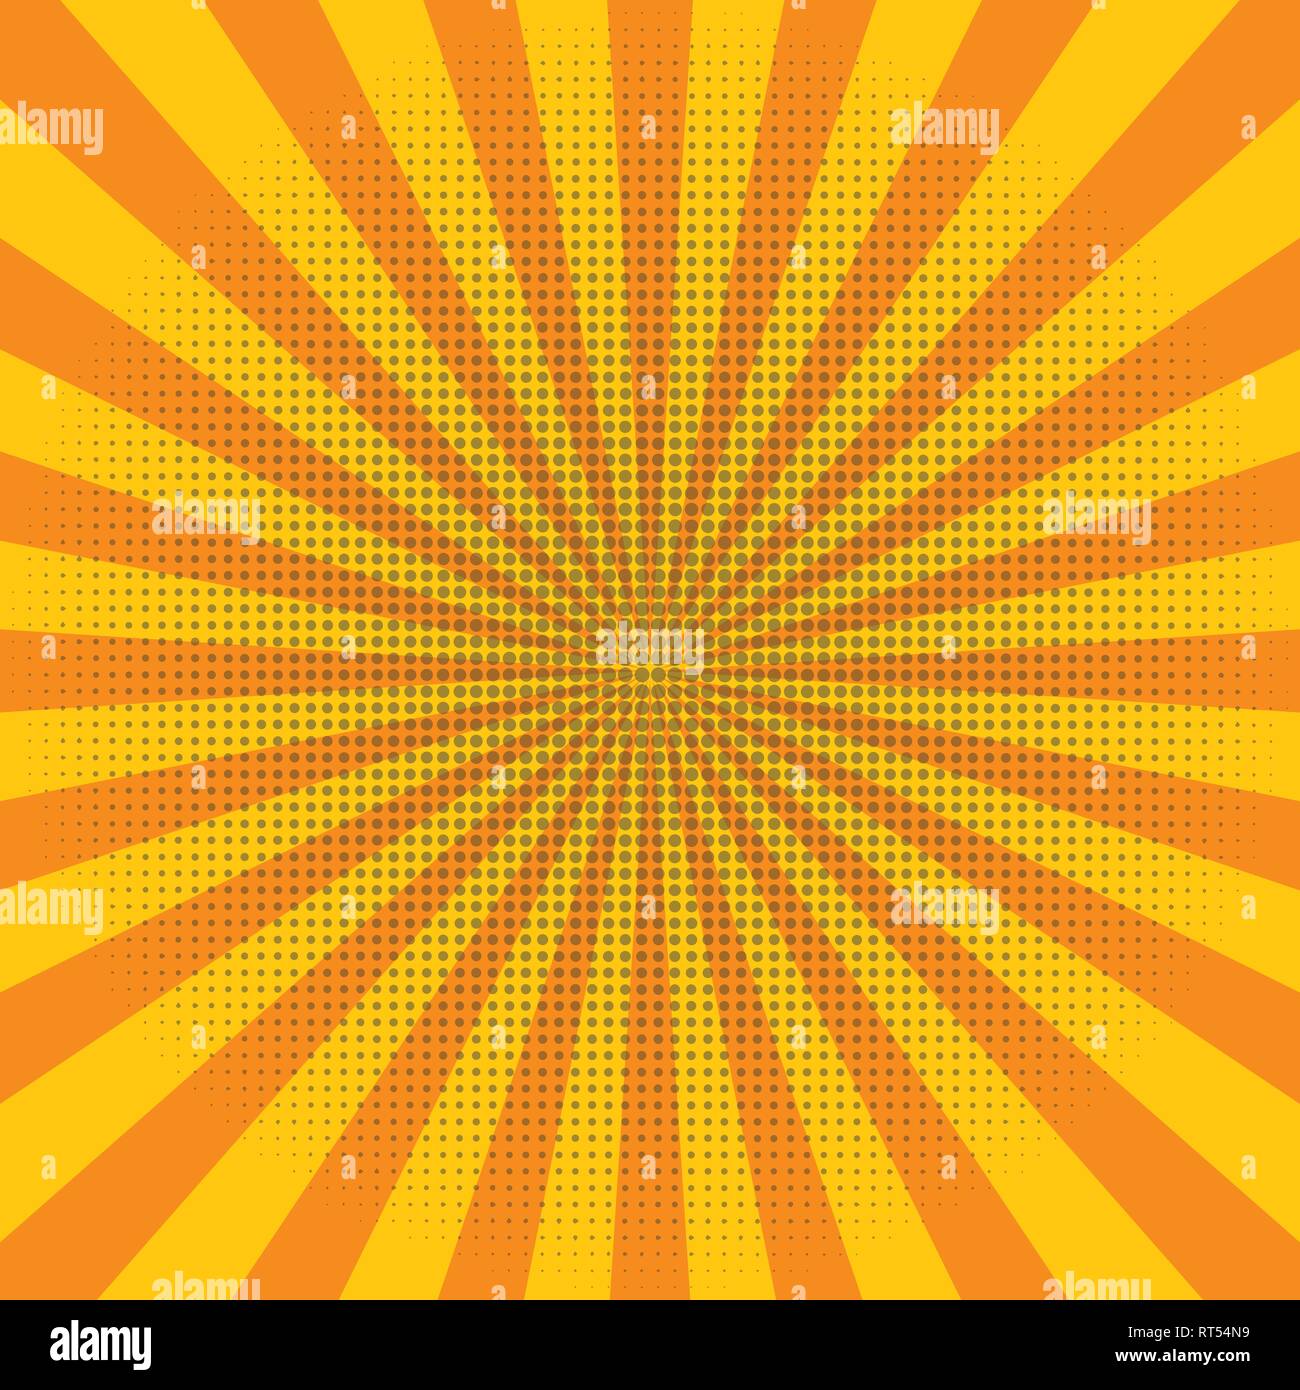 Abstract Light Yellow Sun Rays Background Vector Stock Vector Image Art Alamy